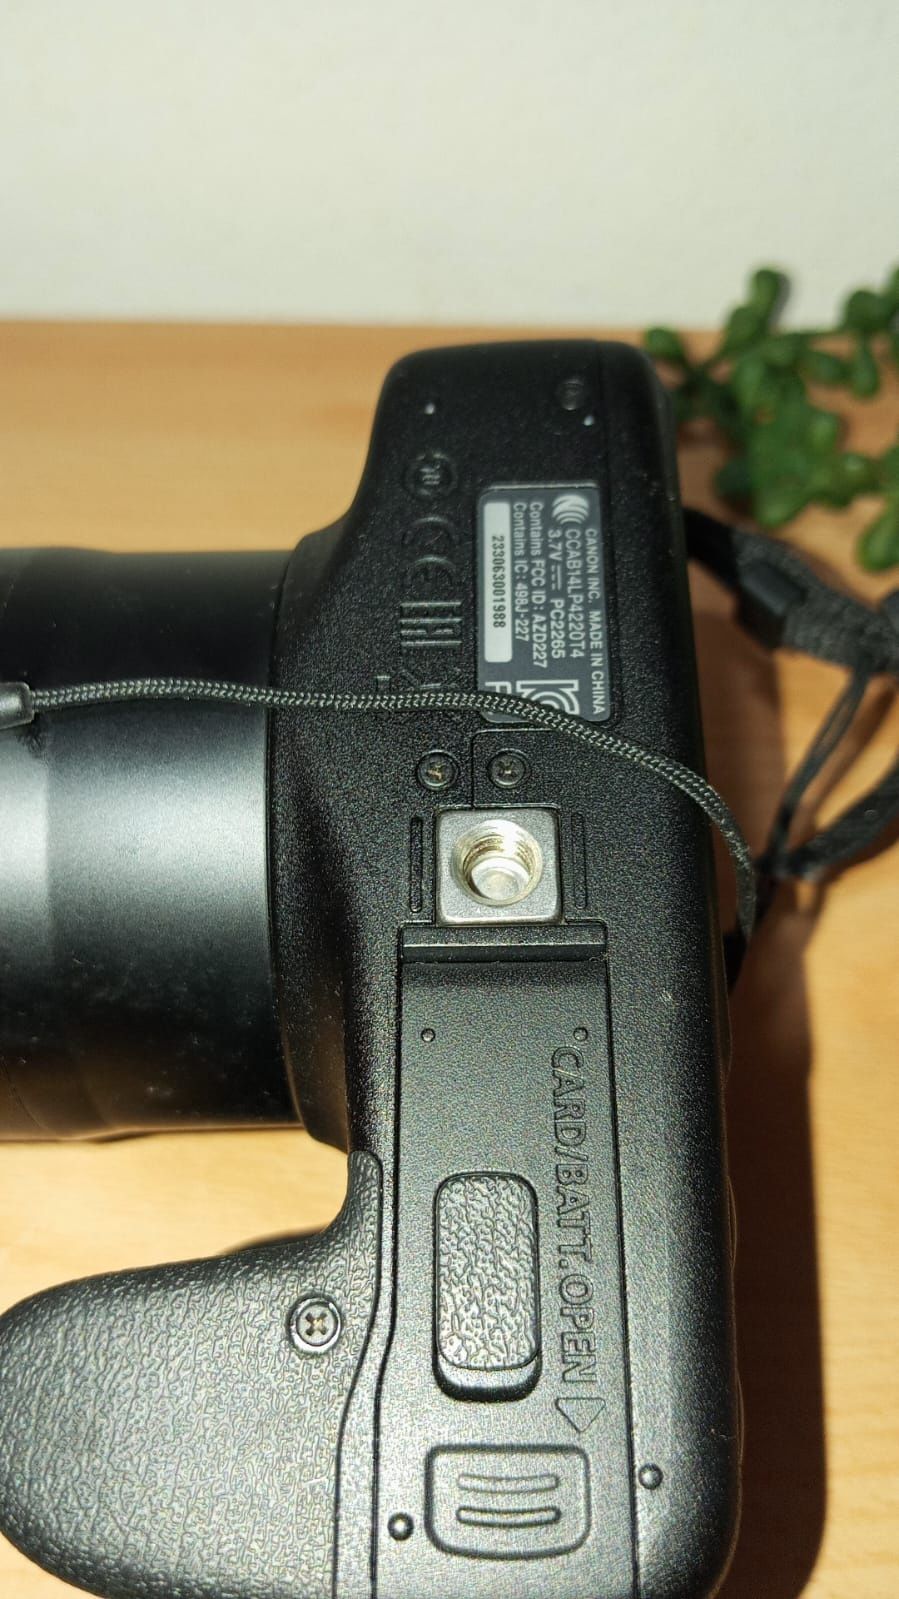 Canon PowerShot Sx540 HS Wi-Fi